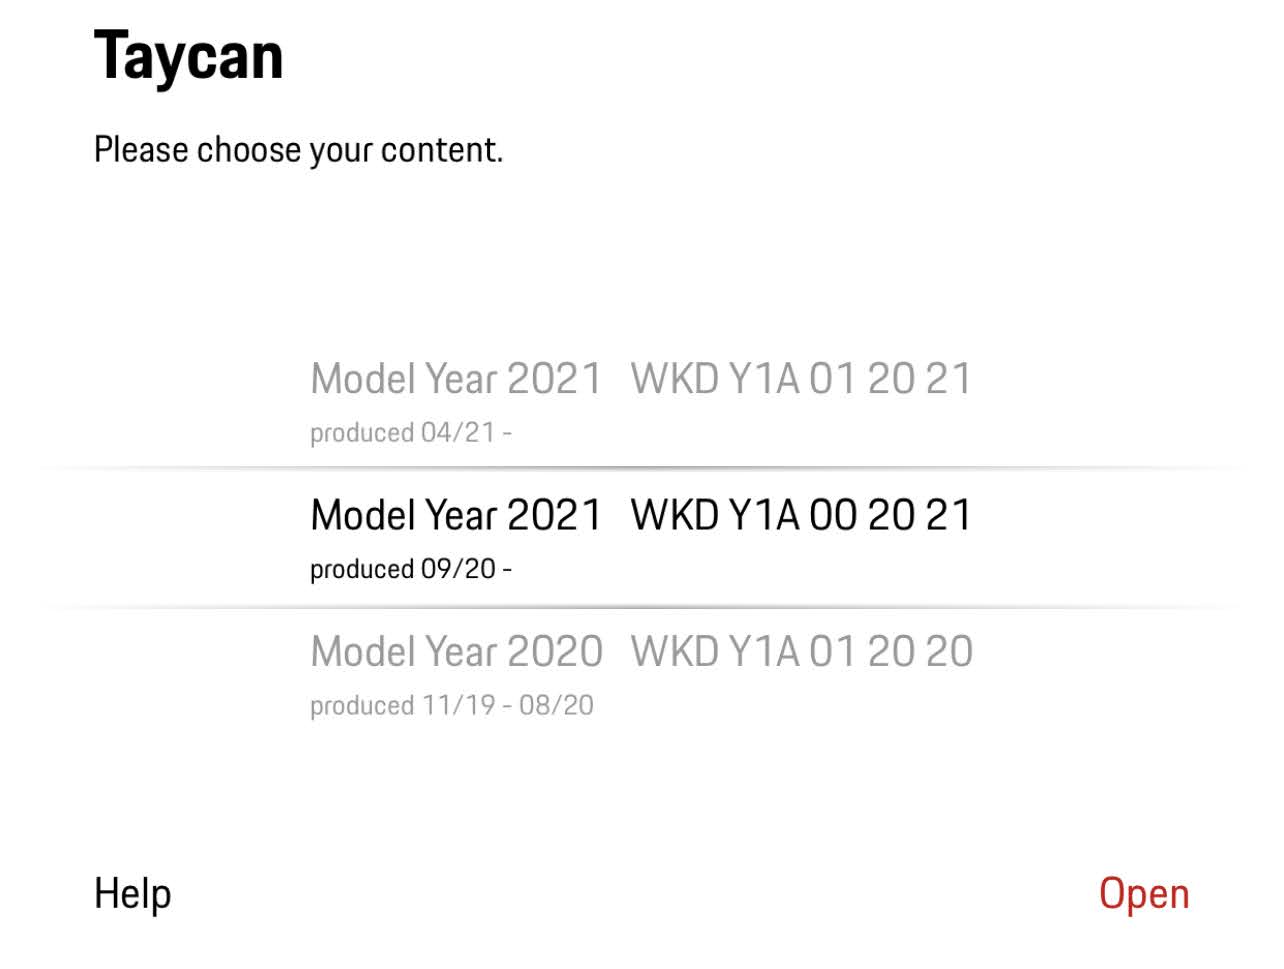 Porsche Taycan Different Between "Model 2021 WKD Y1A 00 20 21" vs "Model 2021 WKD Y1A 01 20 21" IMG_6299